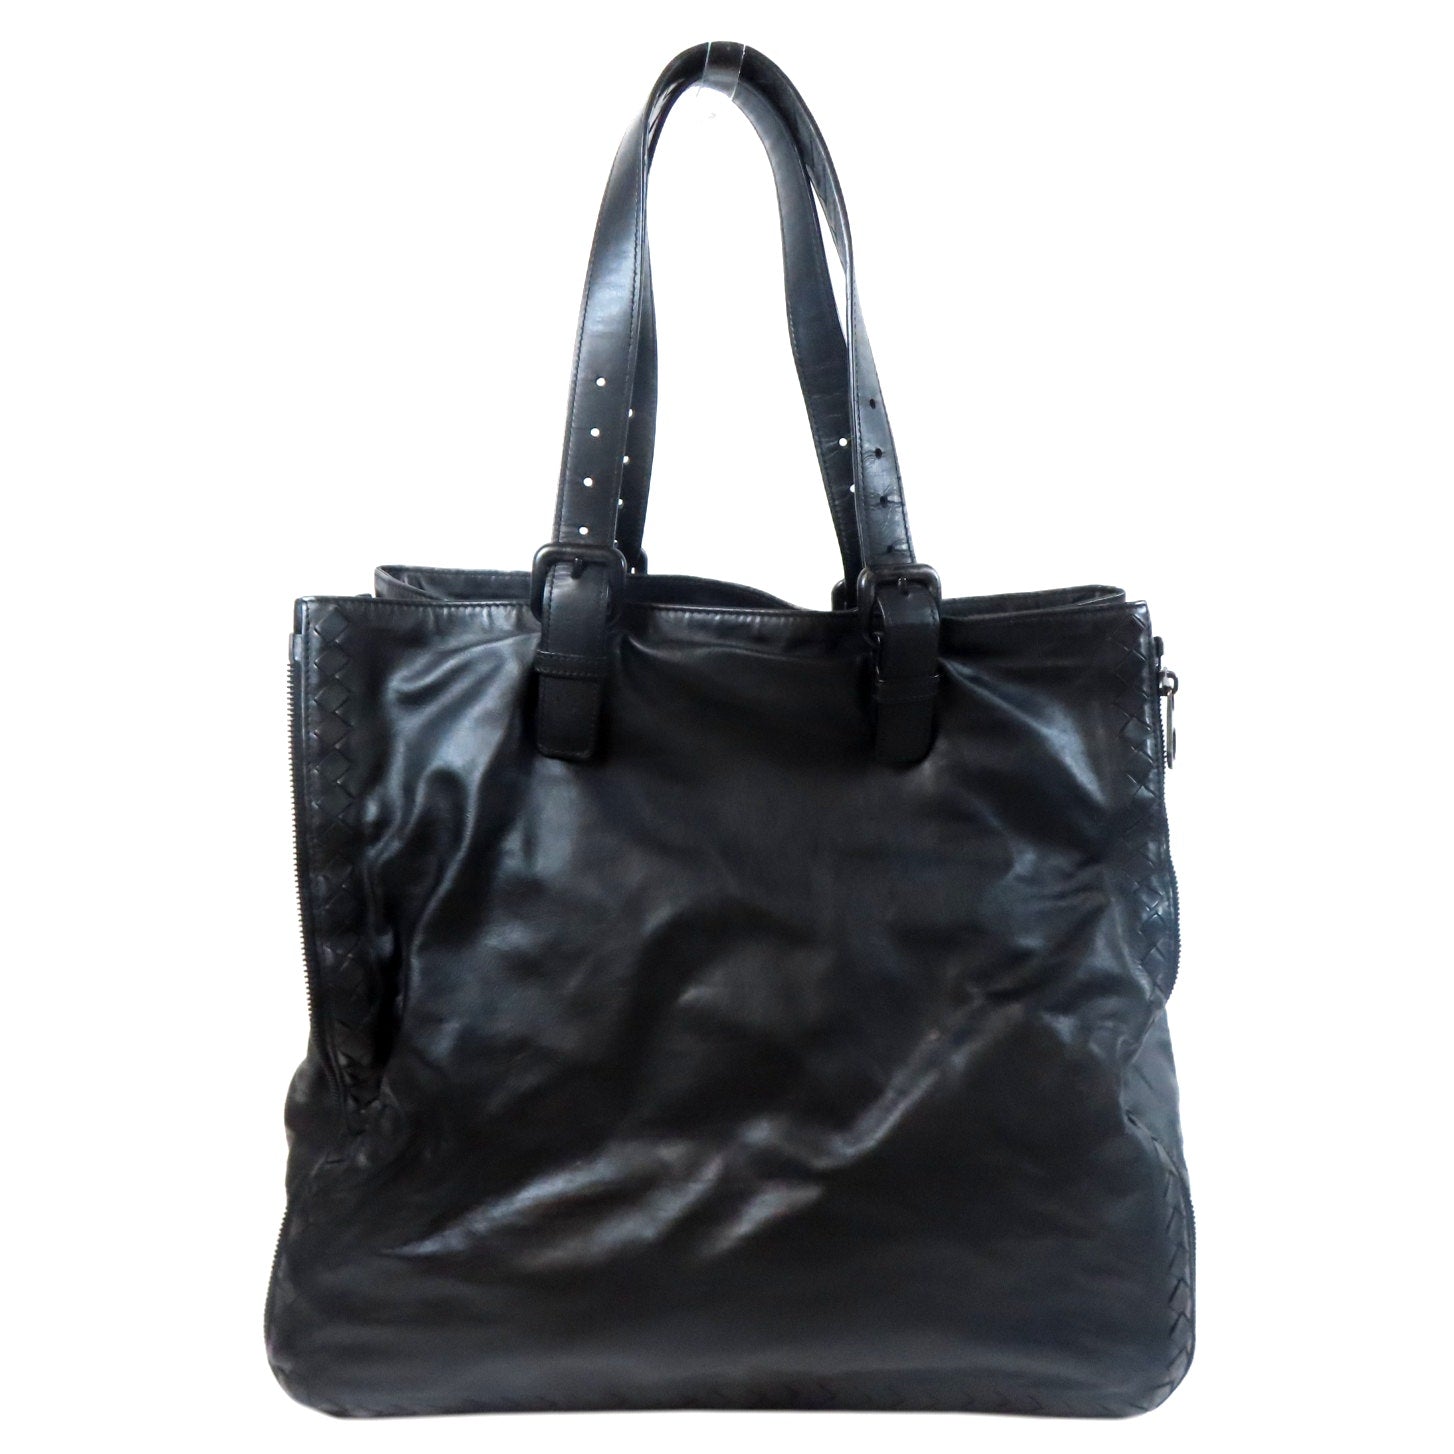 Authentic BOTTEGA VENETA Handbag Leather Black